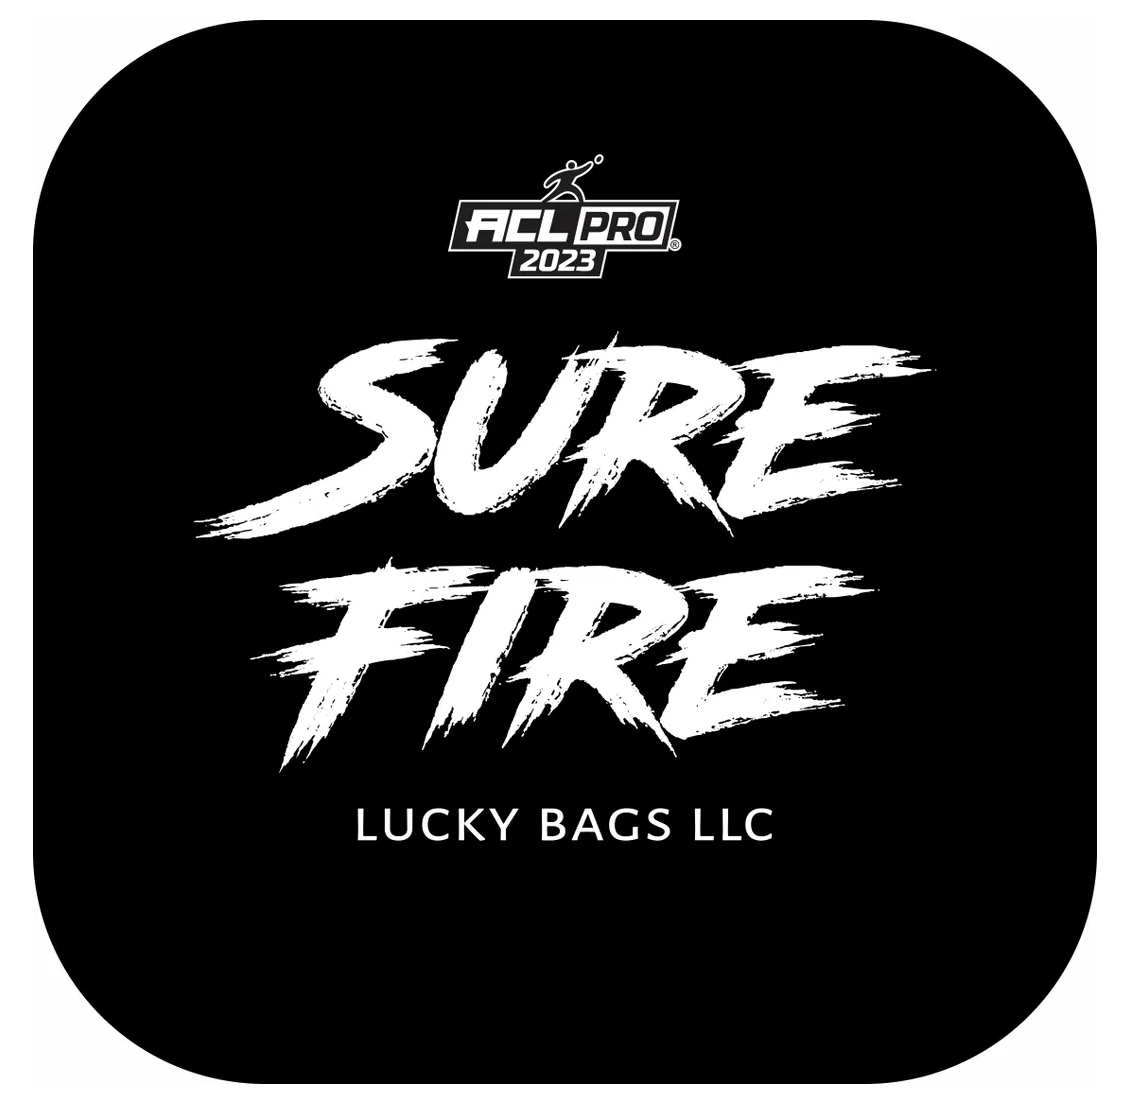 Sacs Lucky - Surefire 2023 - 1x4 Cornhole Sacs